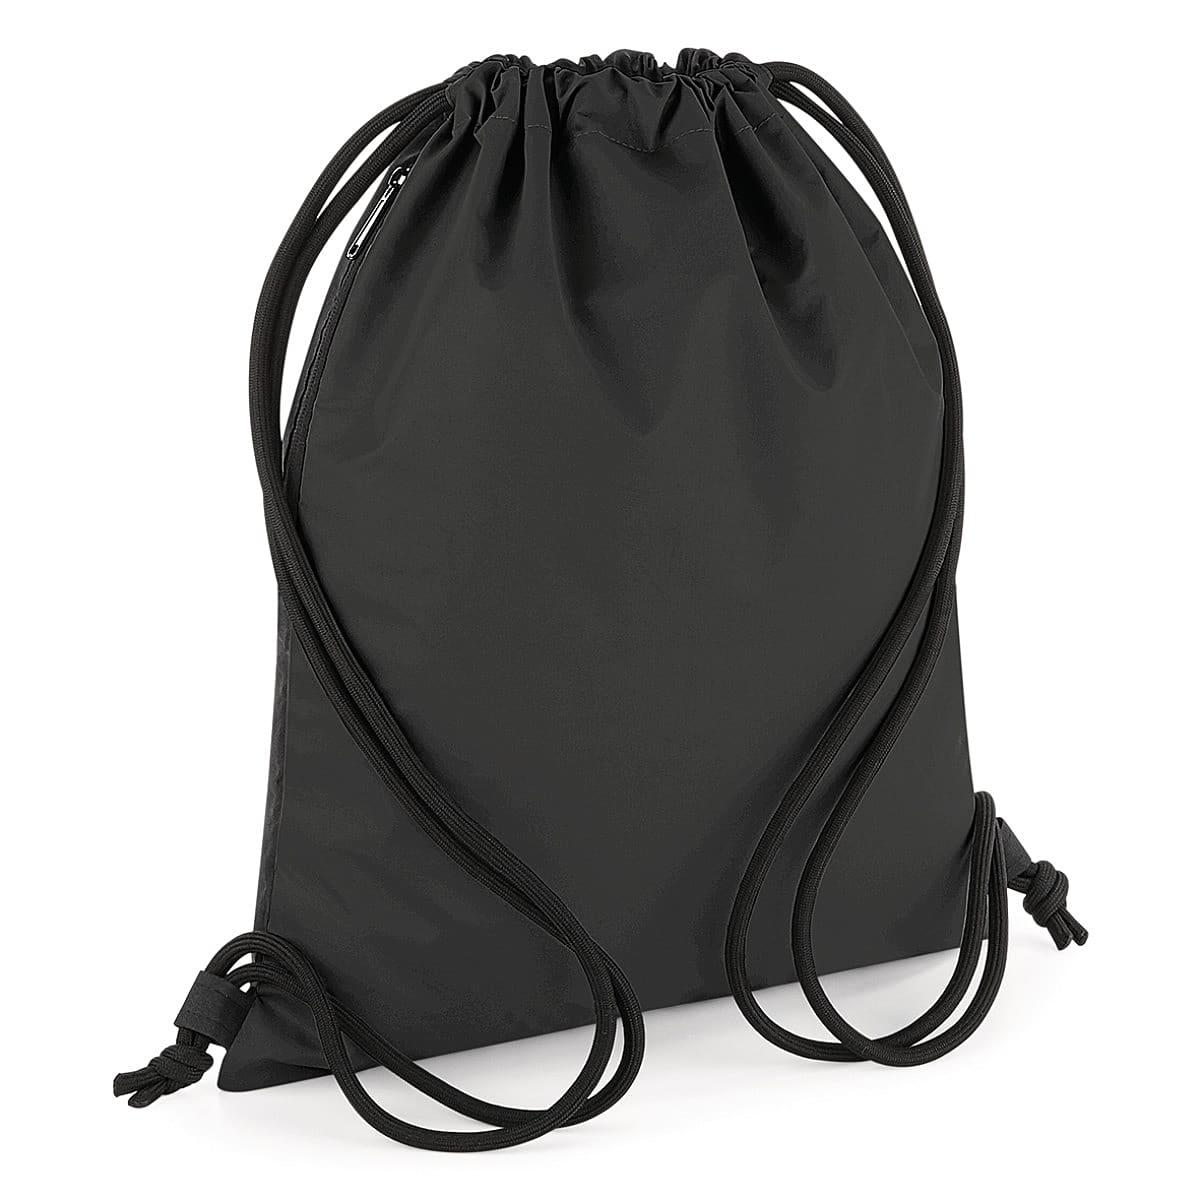 Bagbase Reflective Gymsac in Black / Reflective (Product Code: BG137)